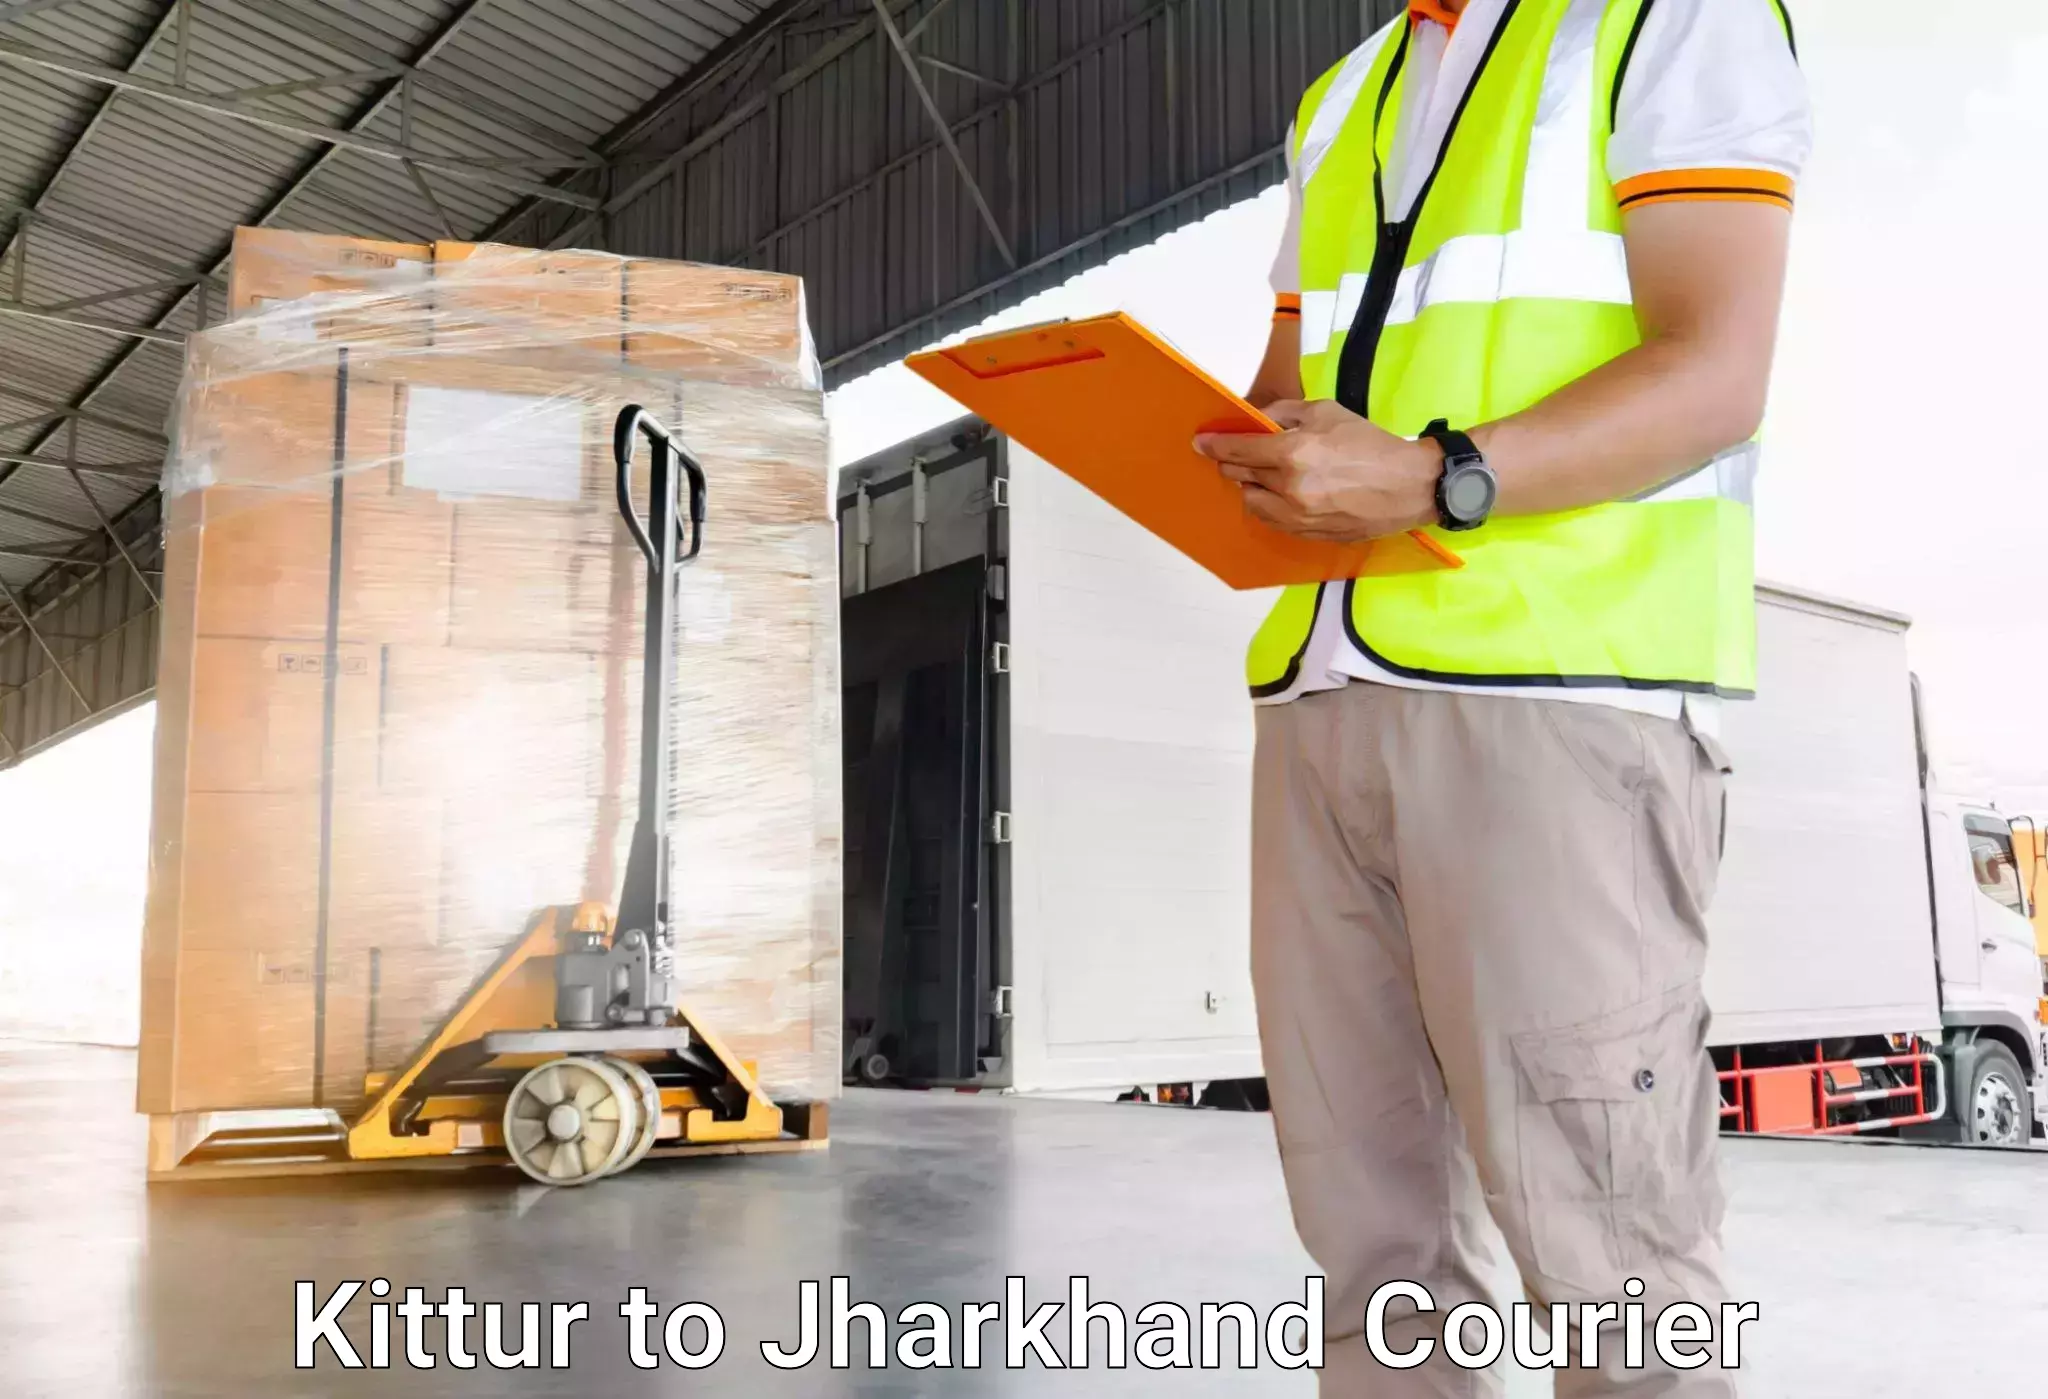 Hassle-free luggage shipping in Kittur to Nirsa